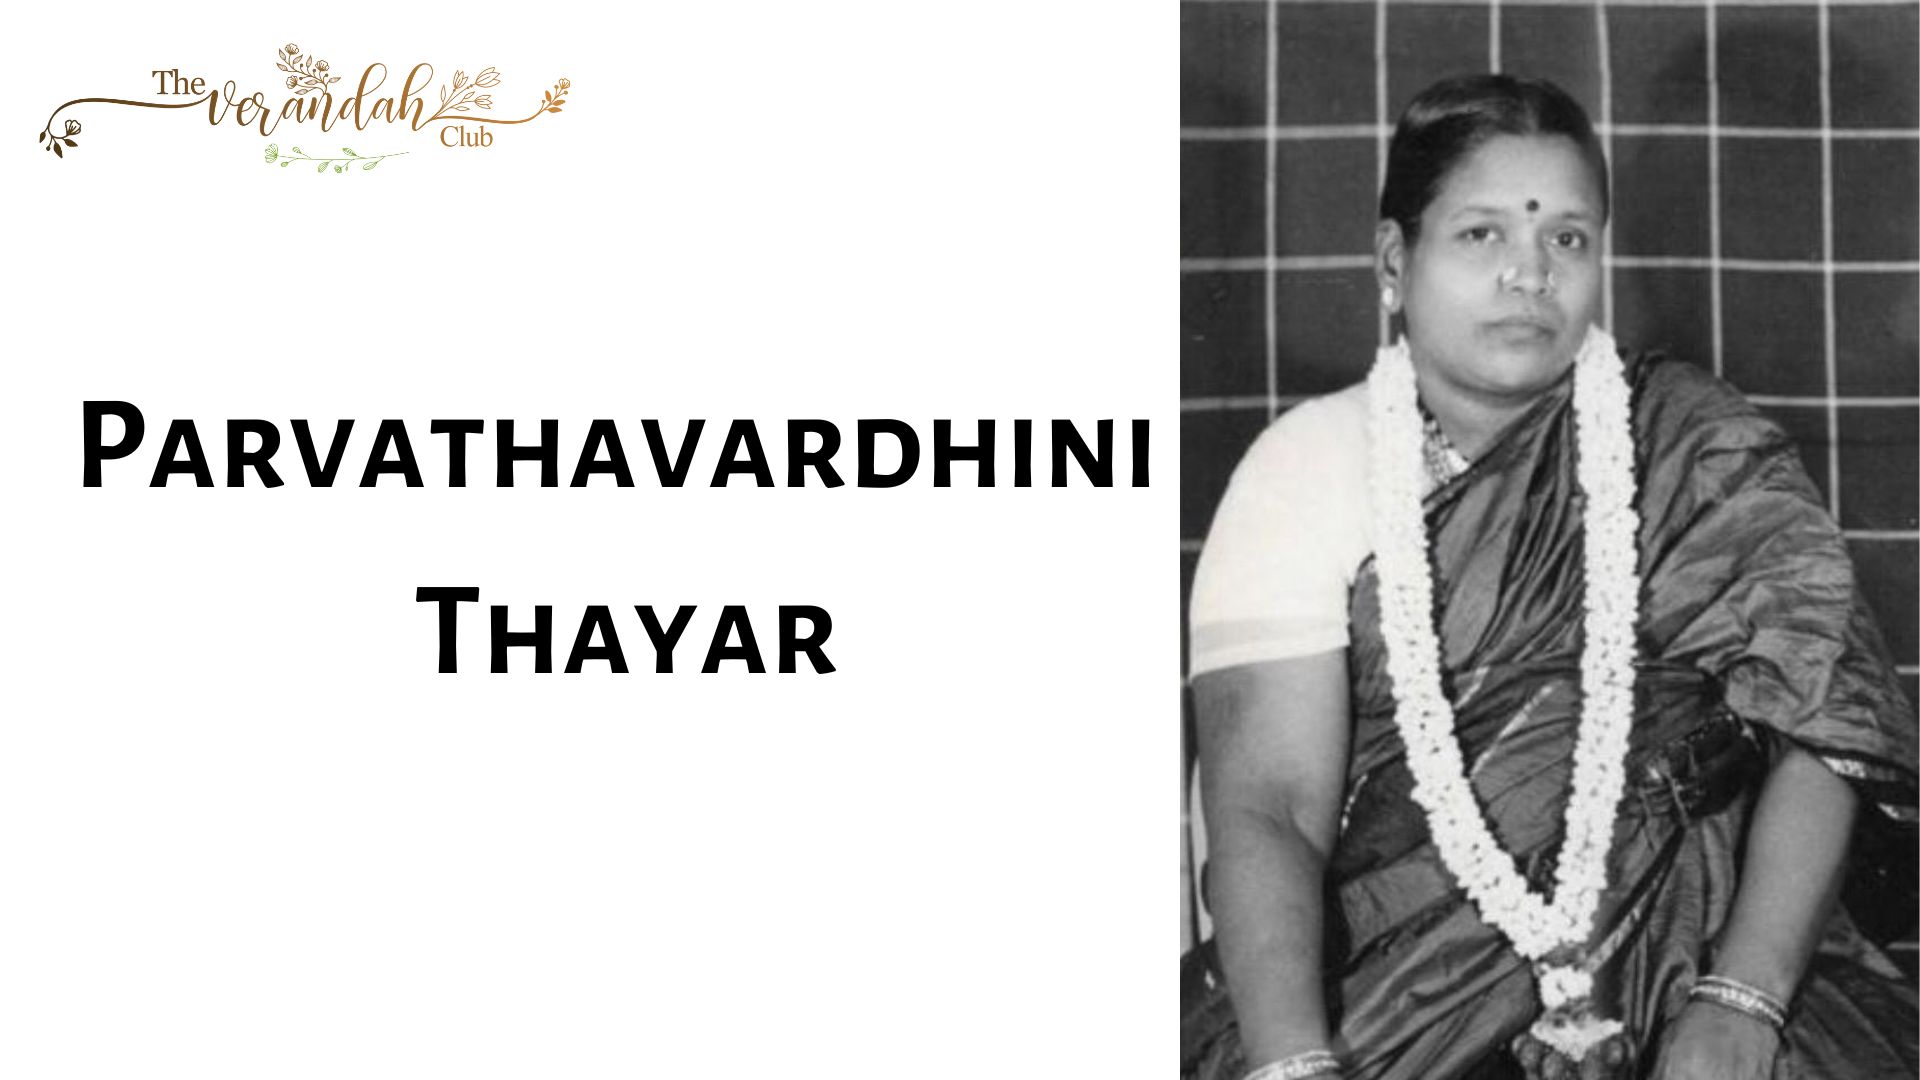 My Great Grandmother Parvathavardhini Thayar